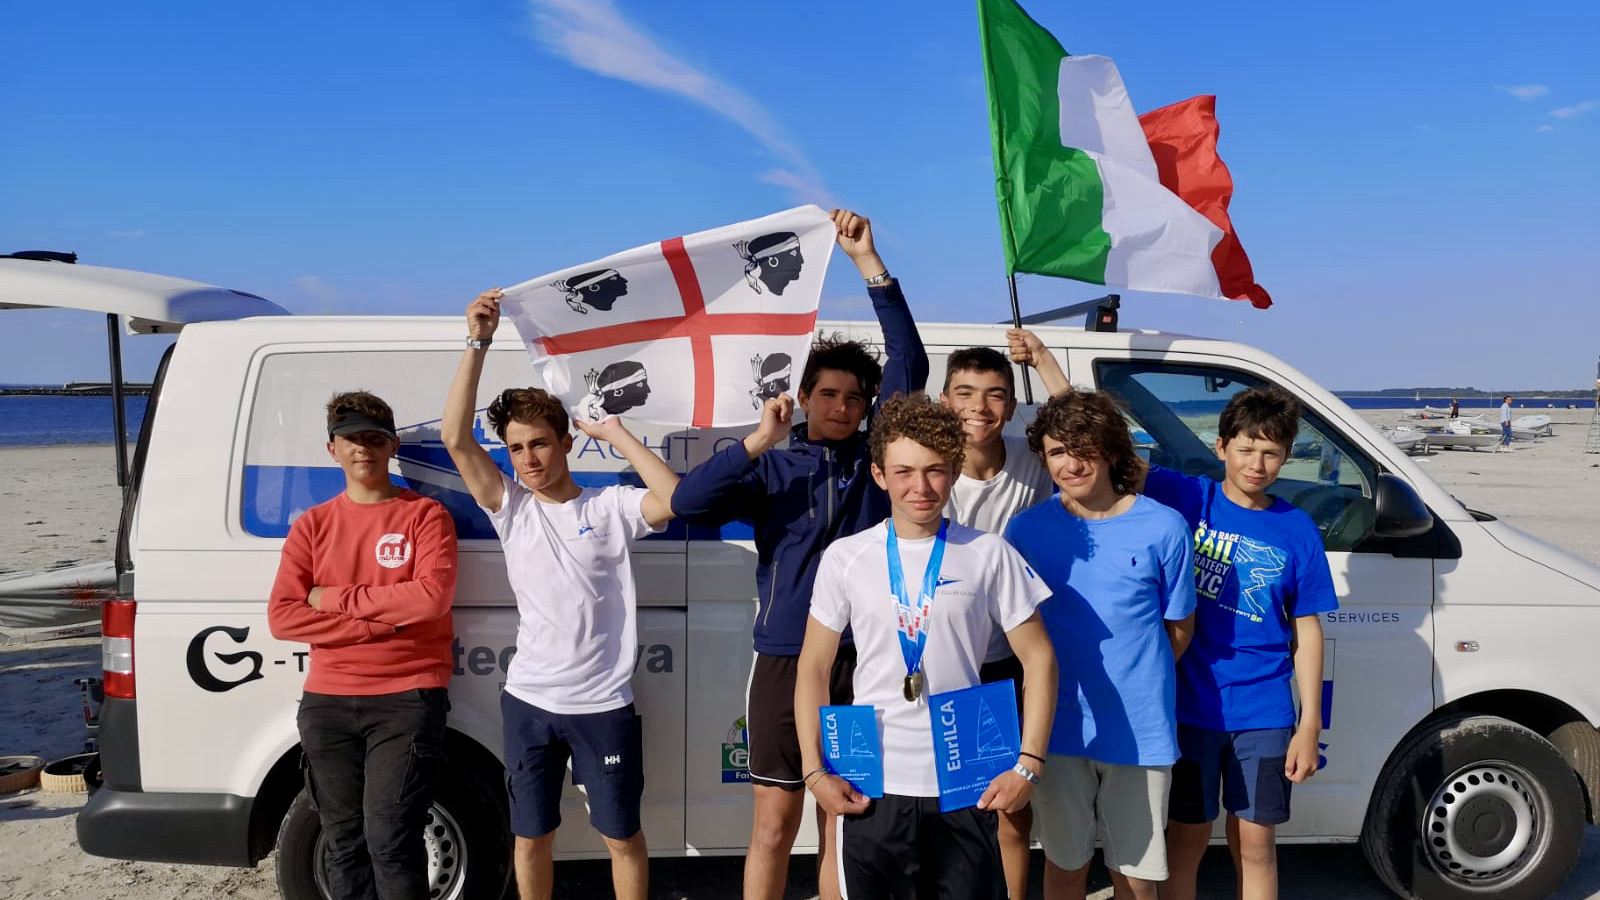 Campionati Europei, lo Yacht Club Olbia ottavo assoluto: 